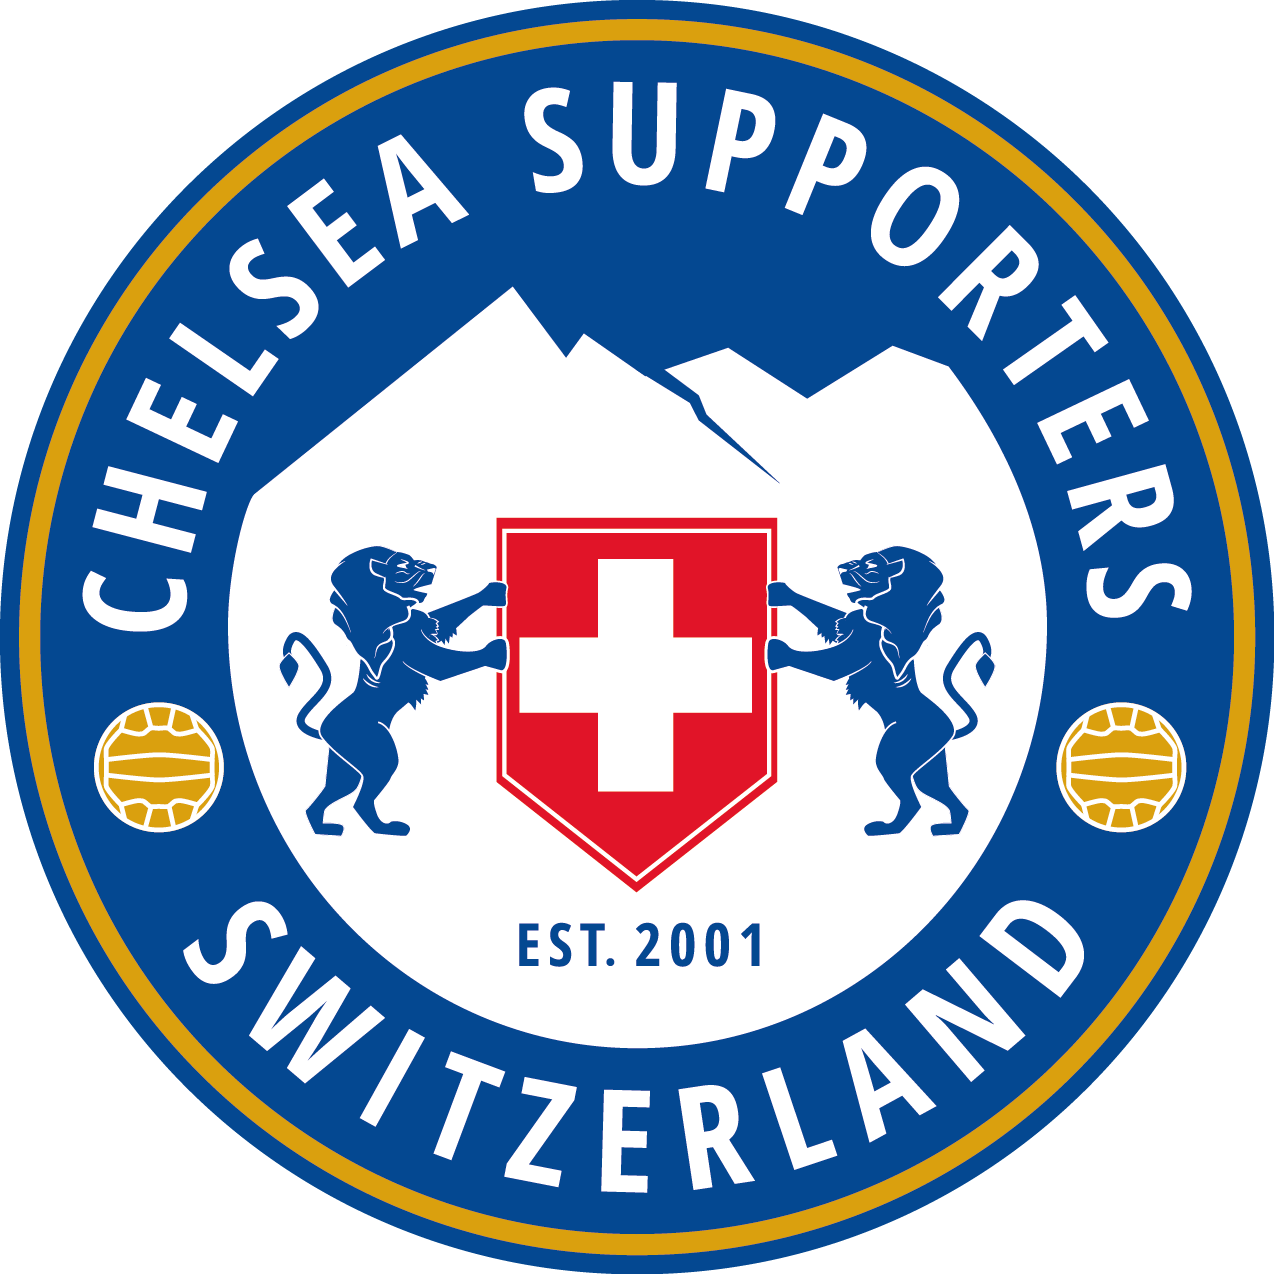 chelsea supporters switzerland